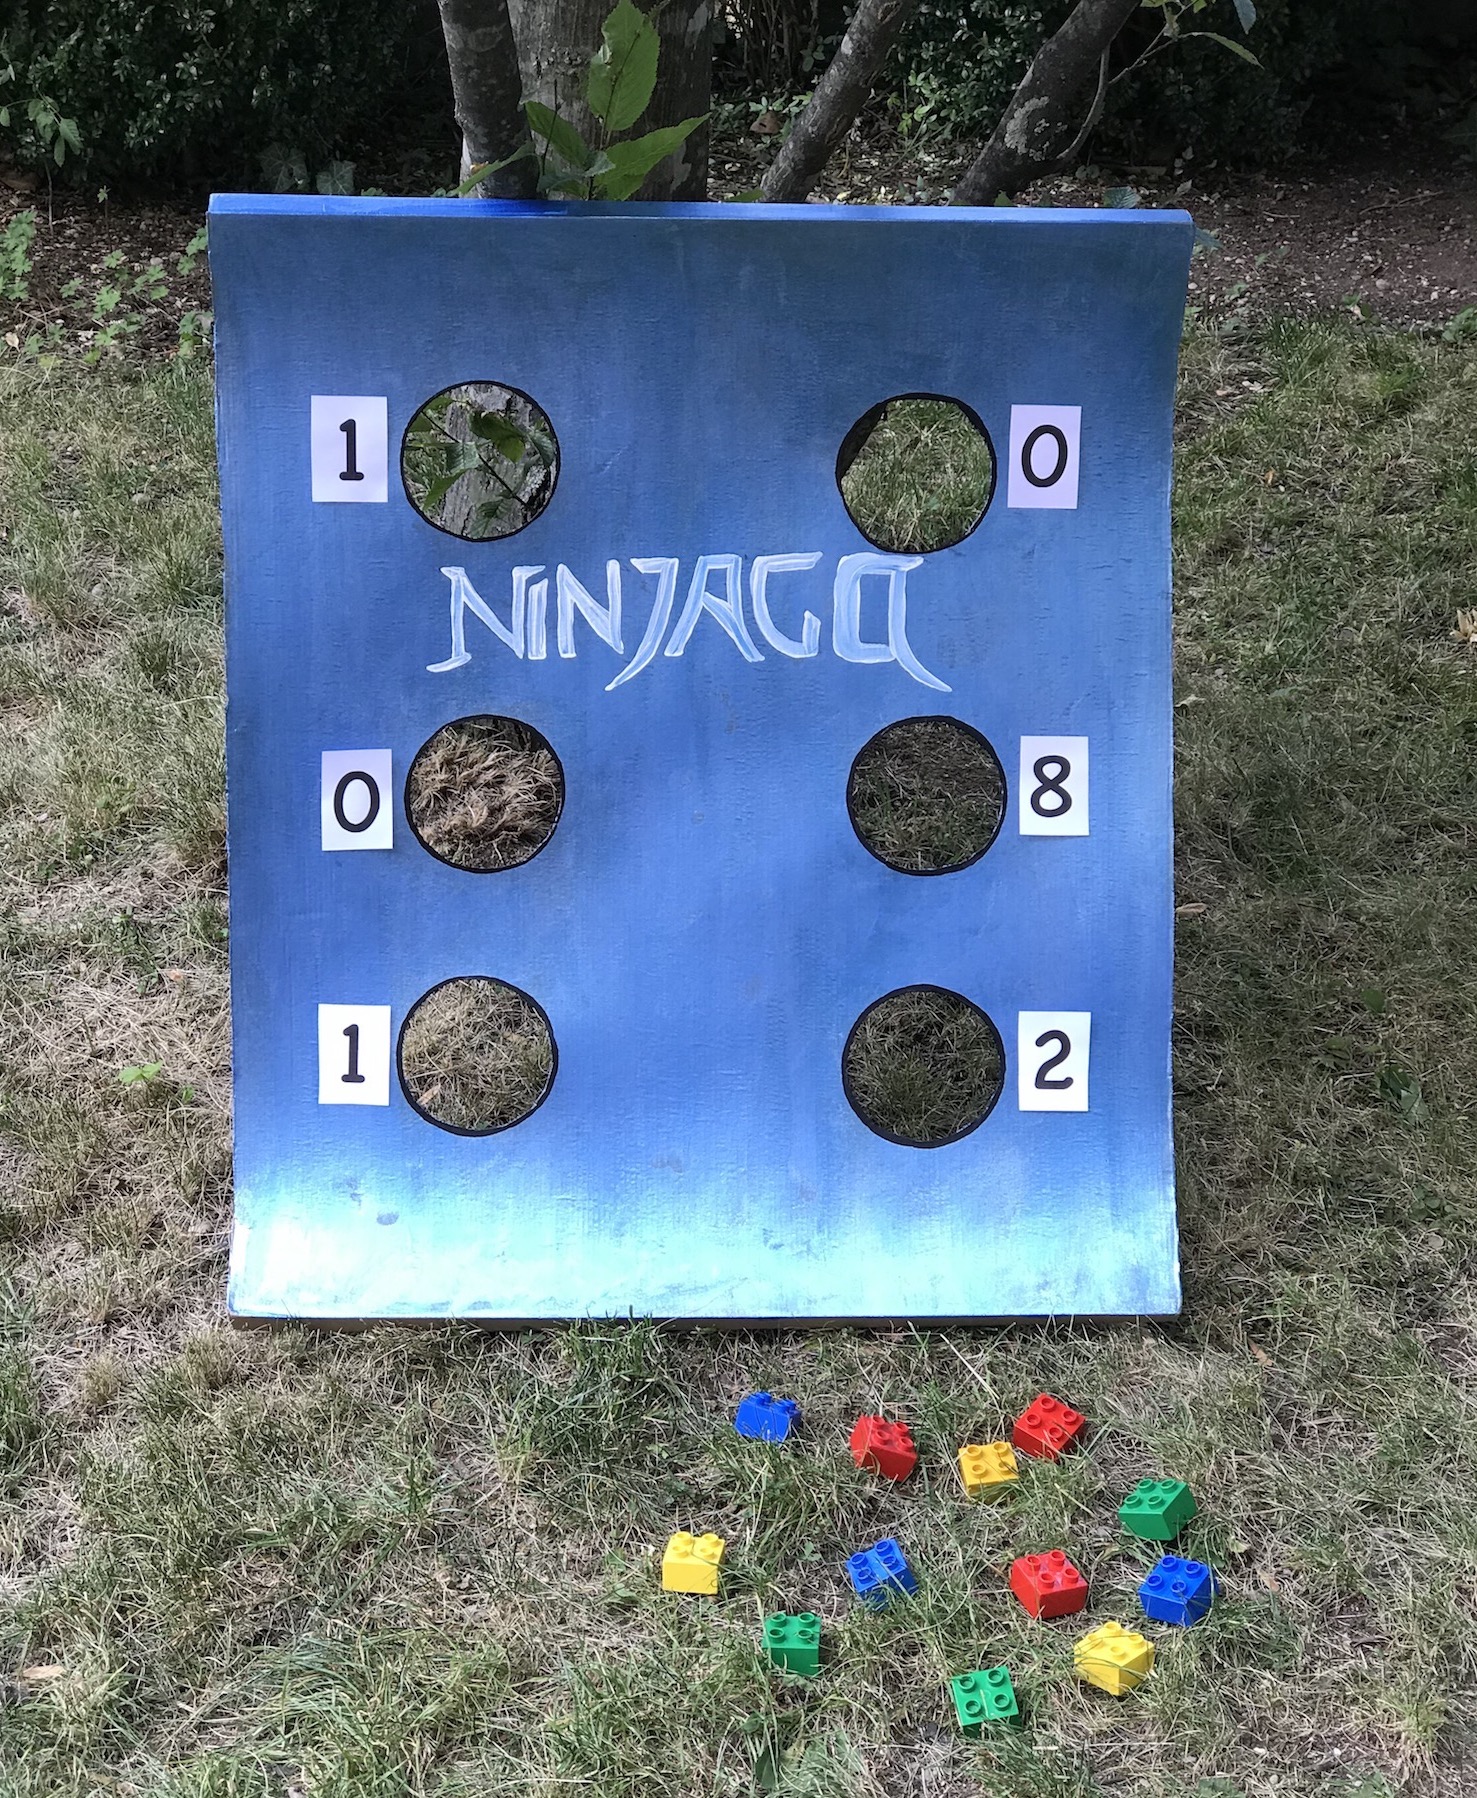 Ninjago lesezeichen - Der TOP-Favorit unserer Produkttester